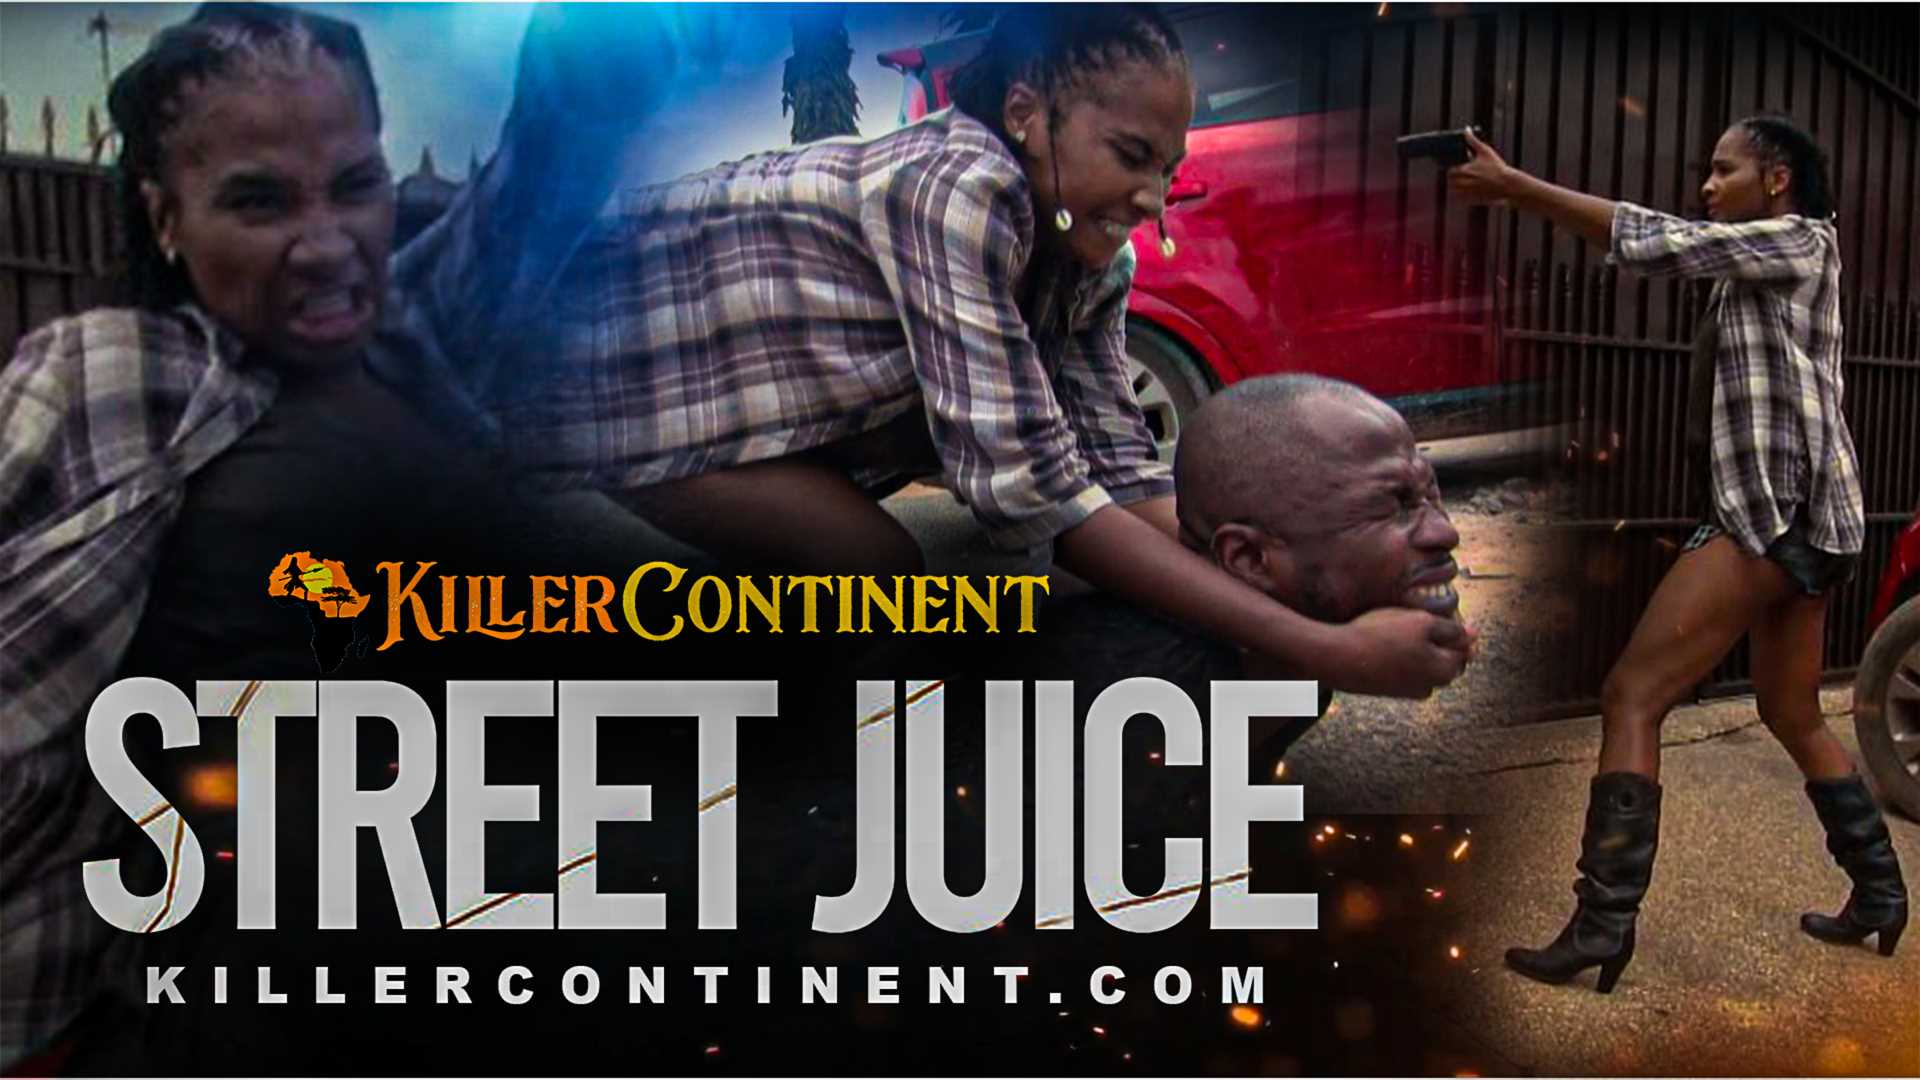 KillerContinent | Killer Continent | STREET JUICE